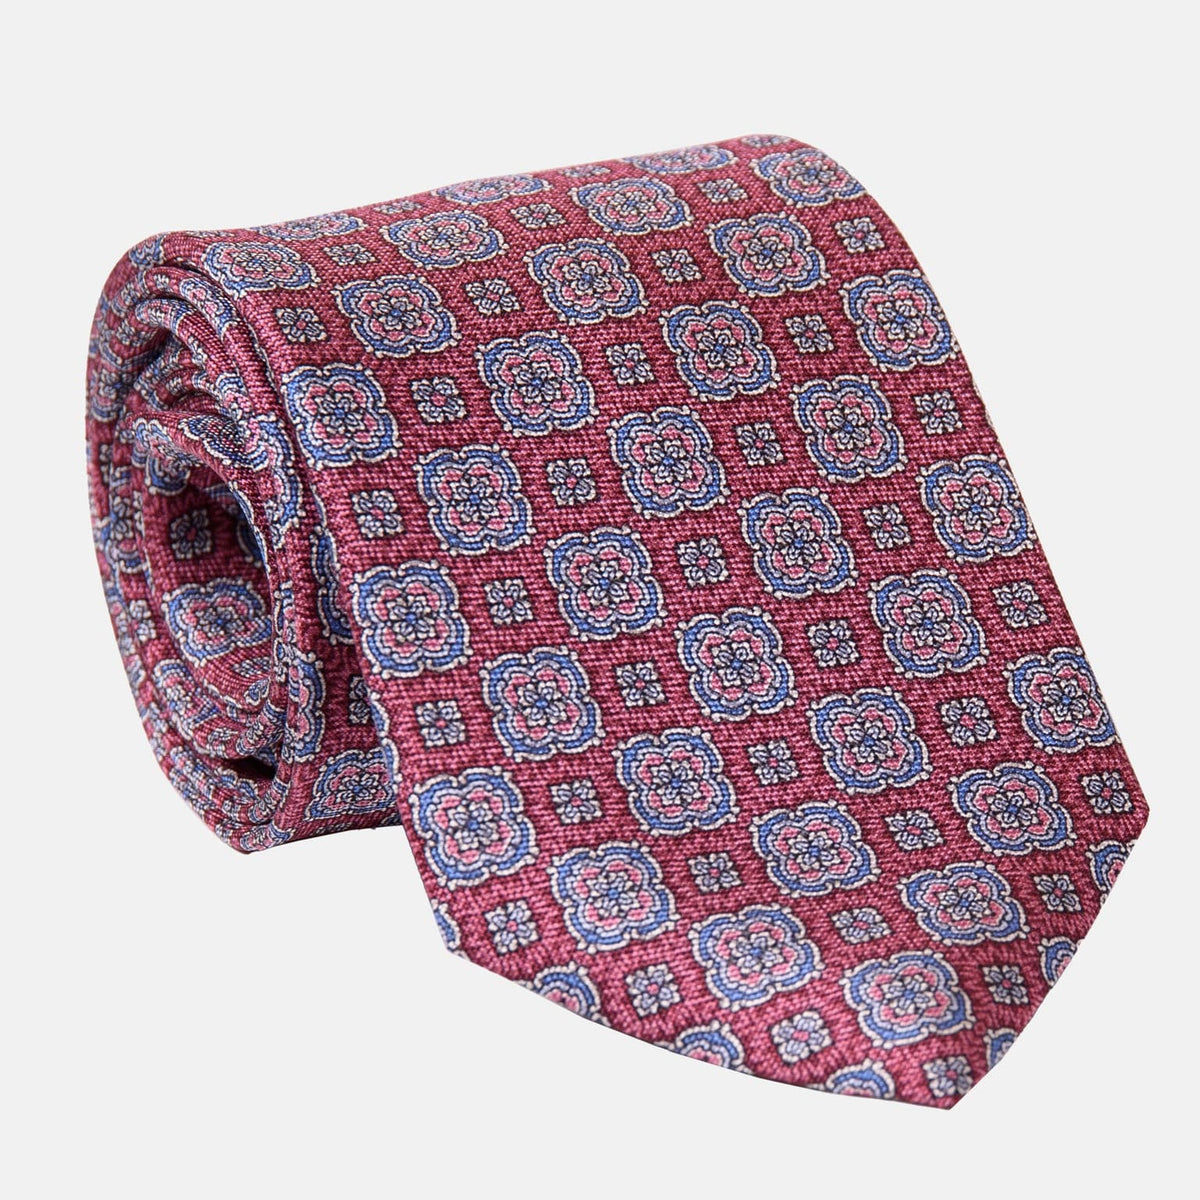 Handmade Red and Blue Italian Silk Tie